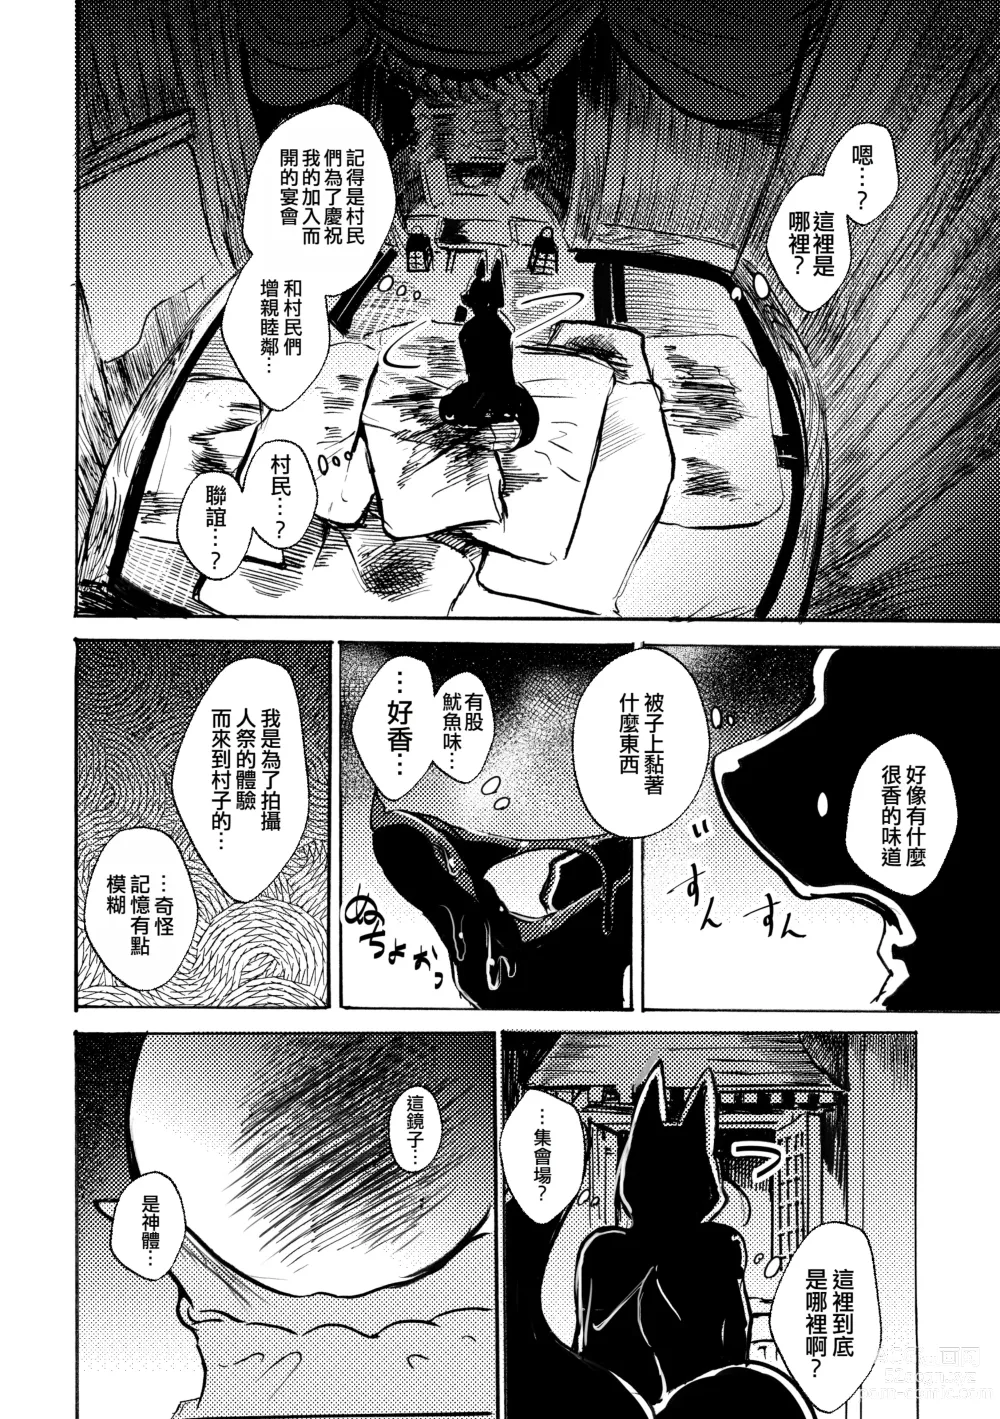 Page 5 of doujinshi 祭後纏深